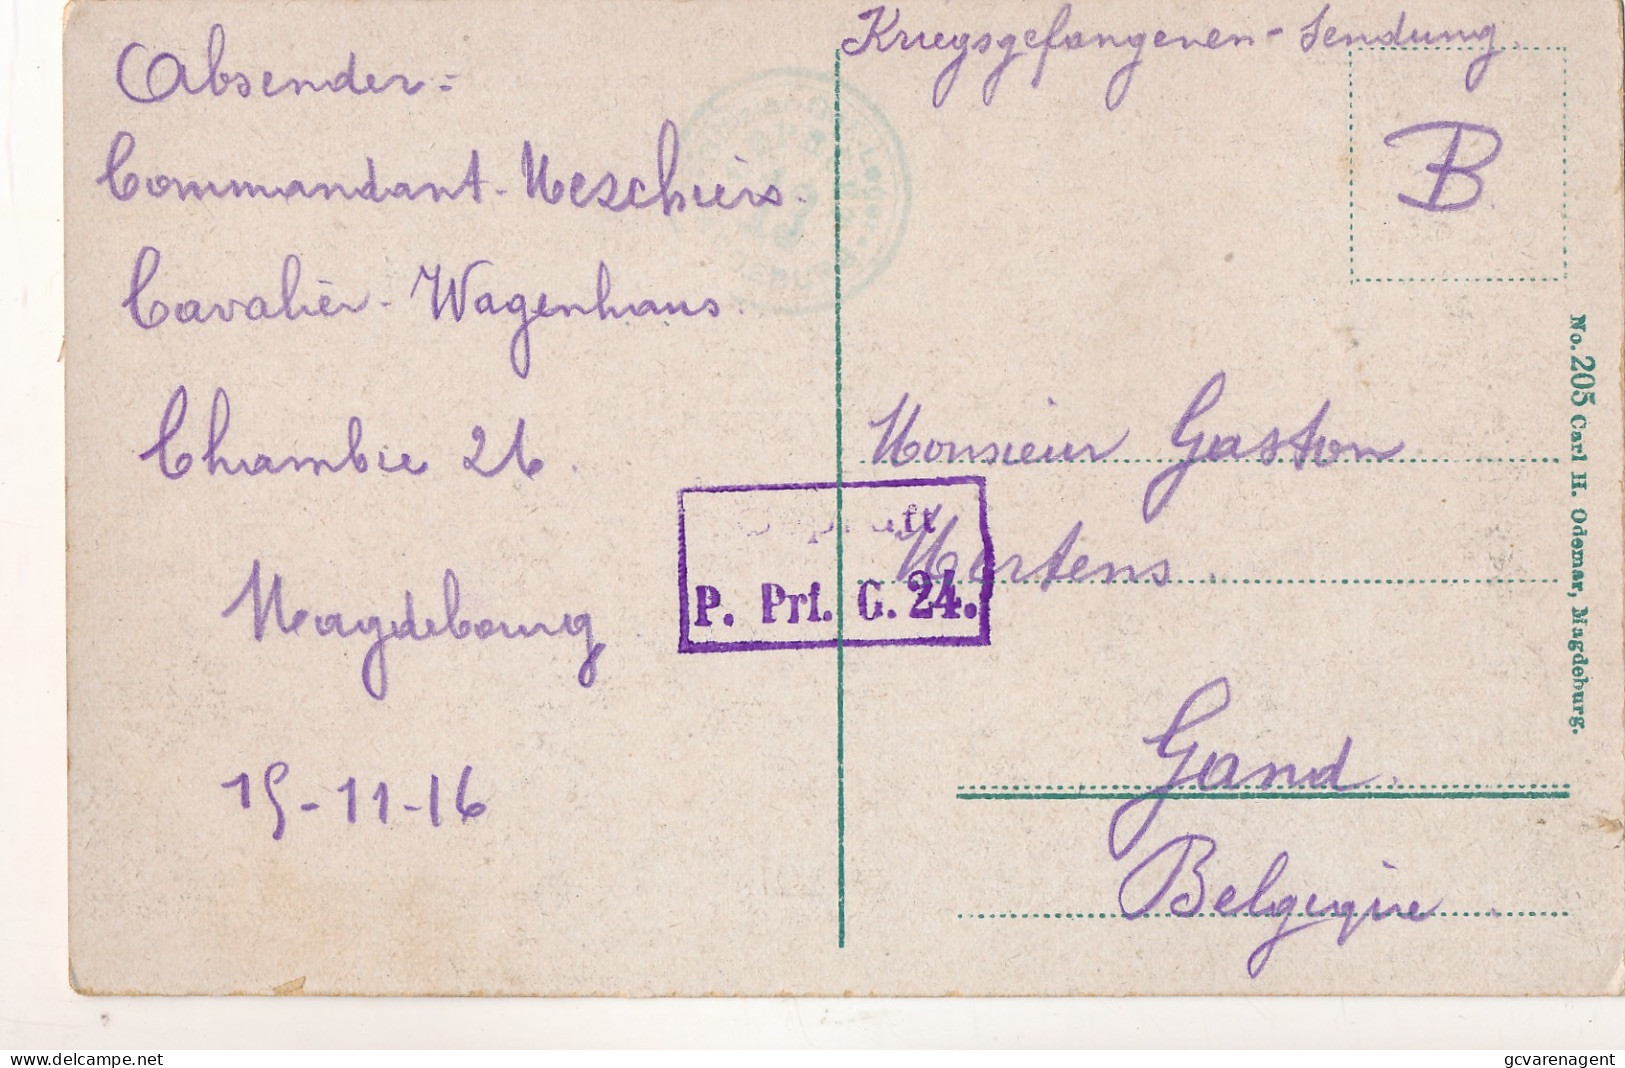 1916  COMMADANT UESCHIERS CAVALIER WAGENHAUS CHAMBRE 26 MAGDEBOURG TO GAND BELGIUM      2  SCANS - Prisioneros